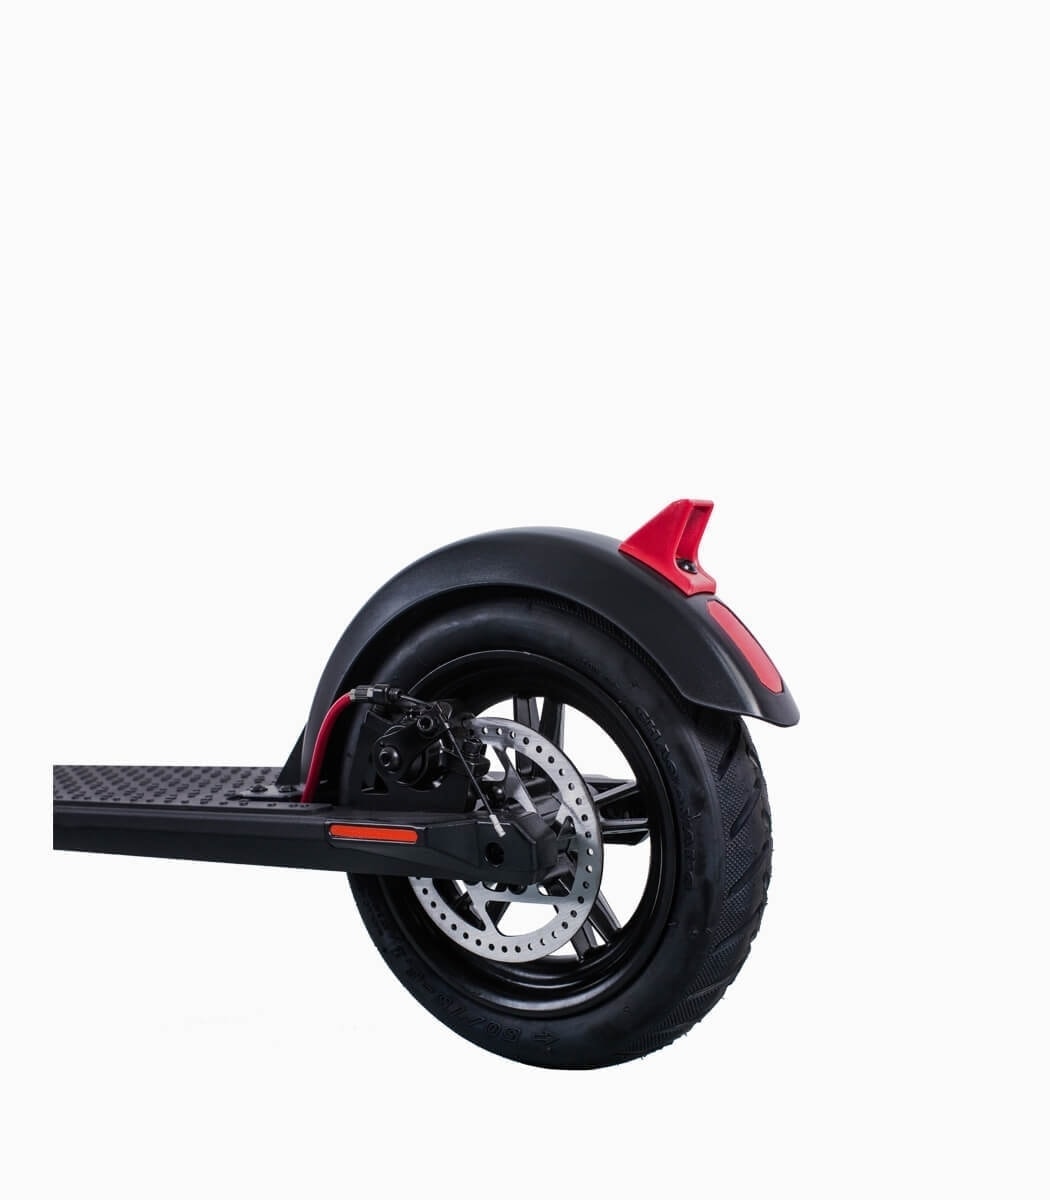 GOTRAX GXL V2 (BLACK5.2AH) UL2272 certified e-scooter rear disc brake